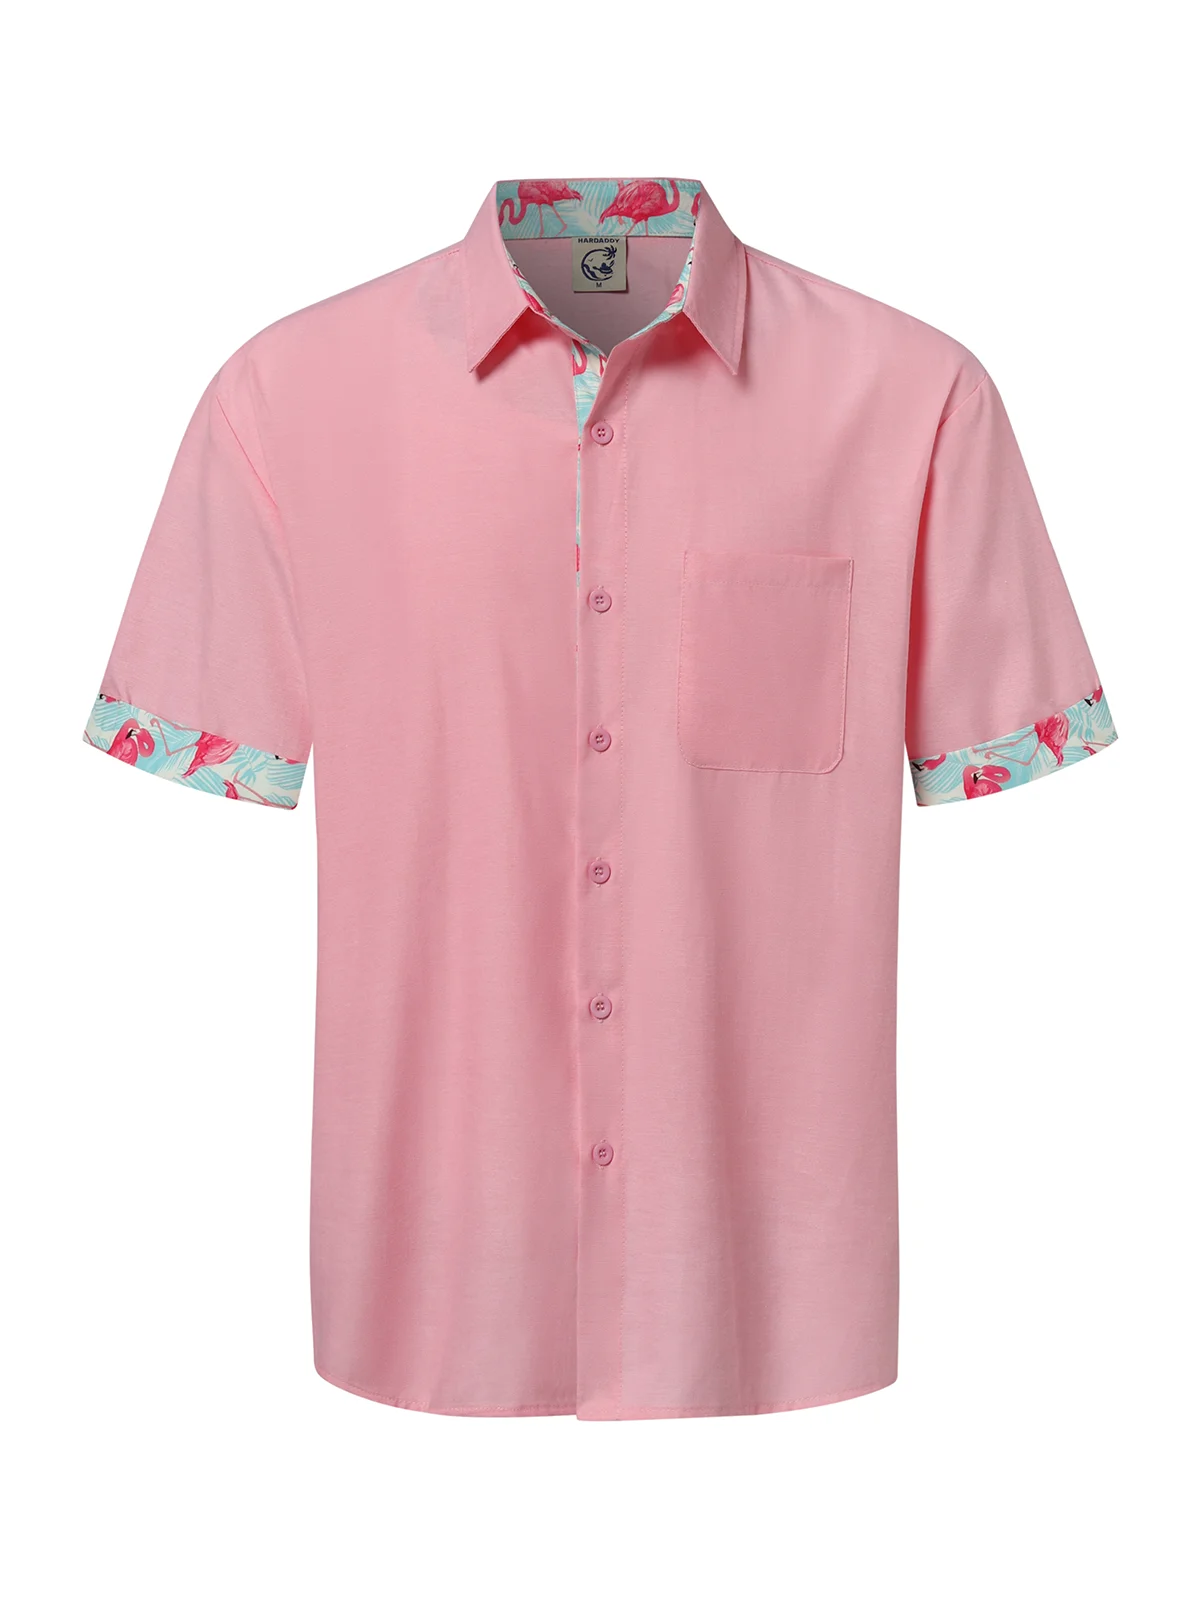 Hardaddy Cotton Contrast Flamingo Short Sleeve Casual Shirt